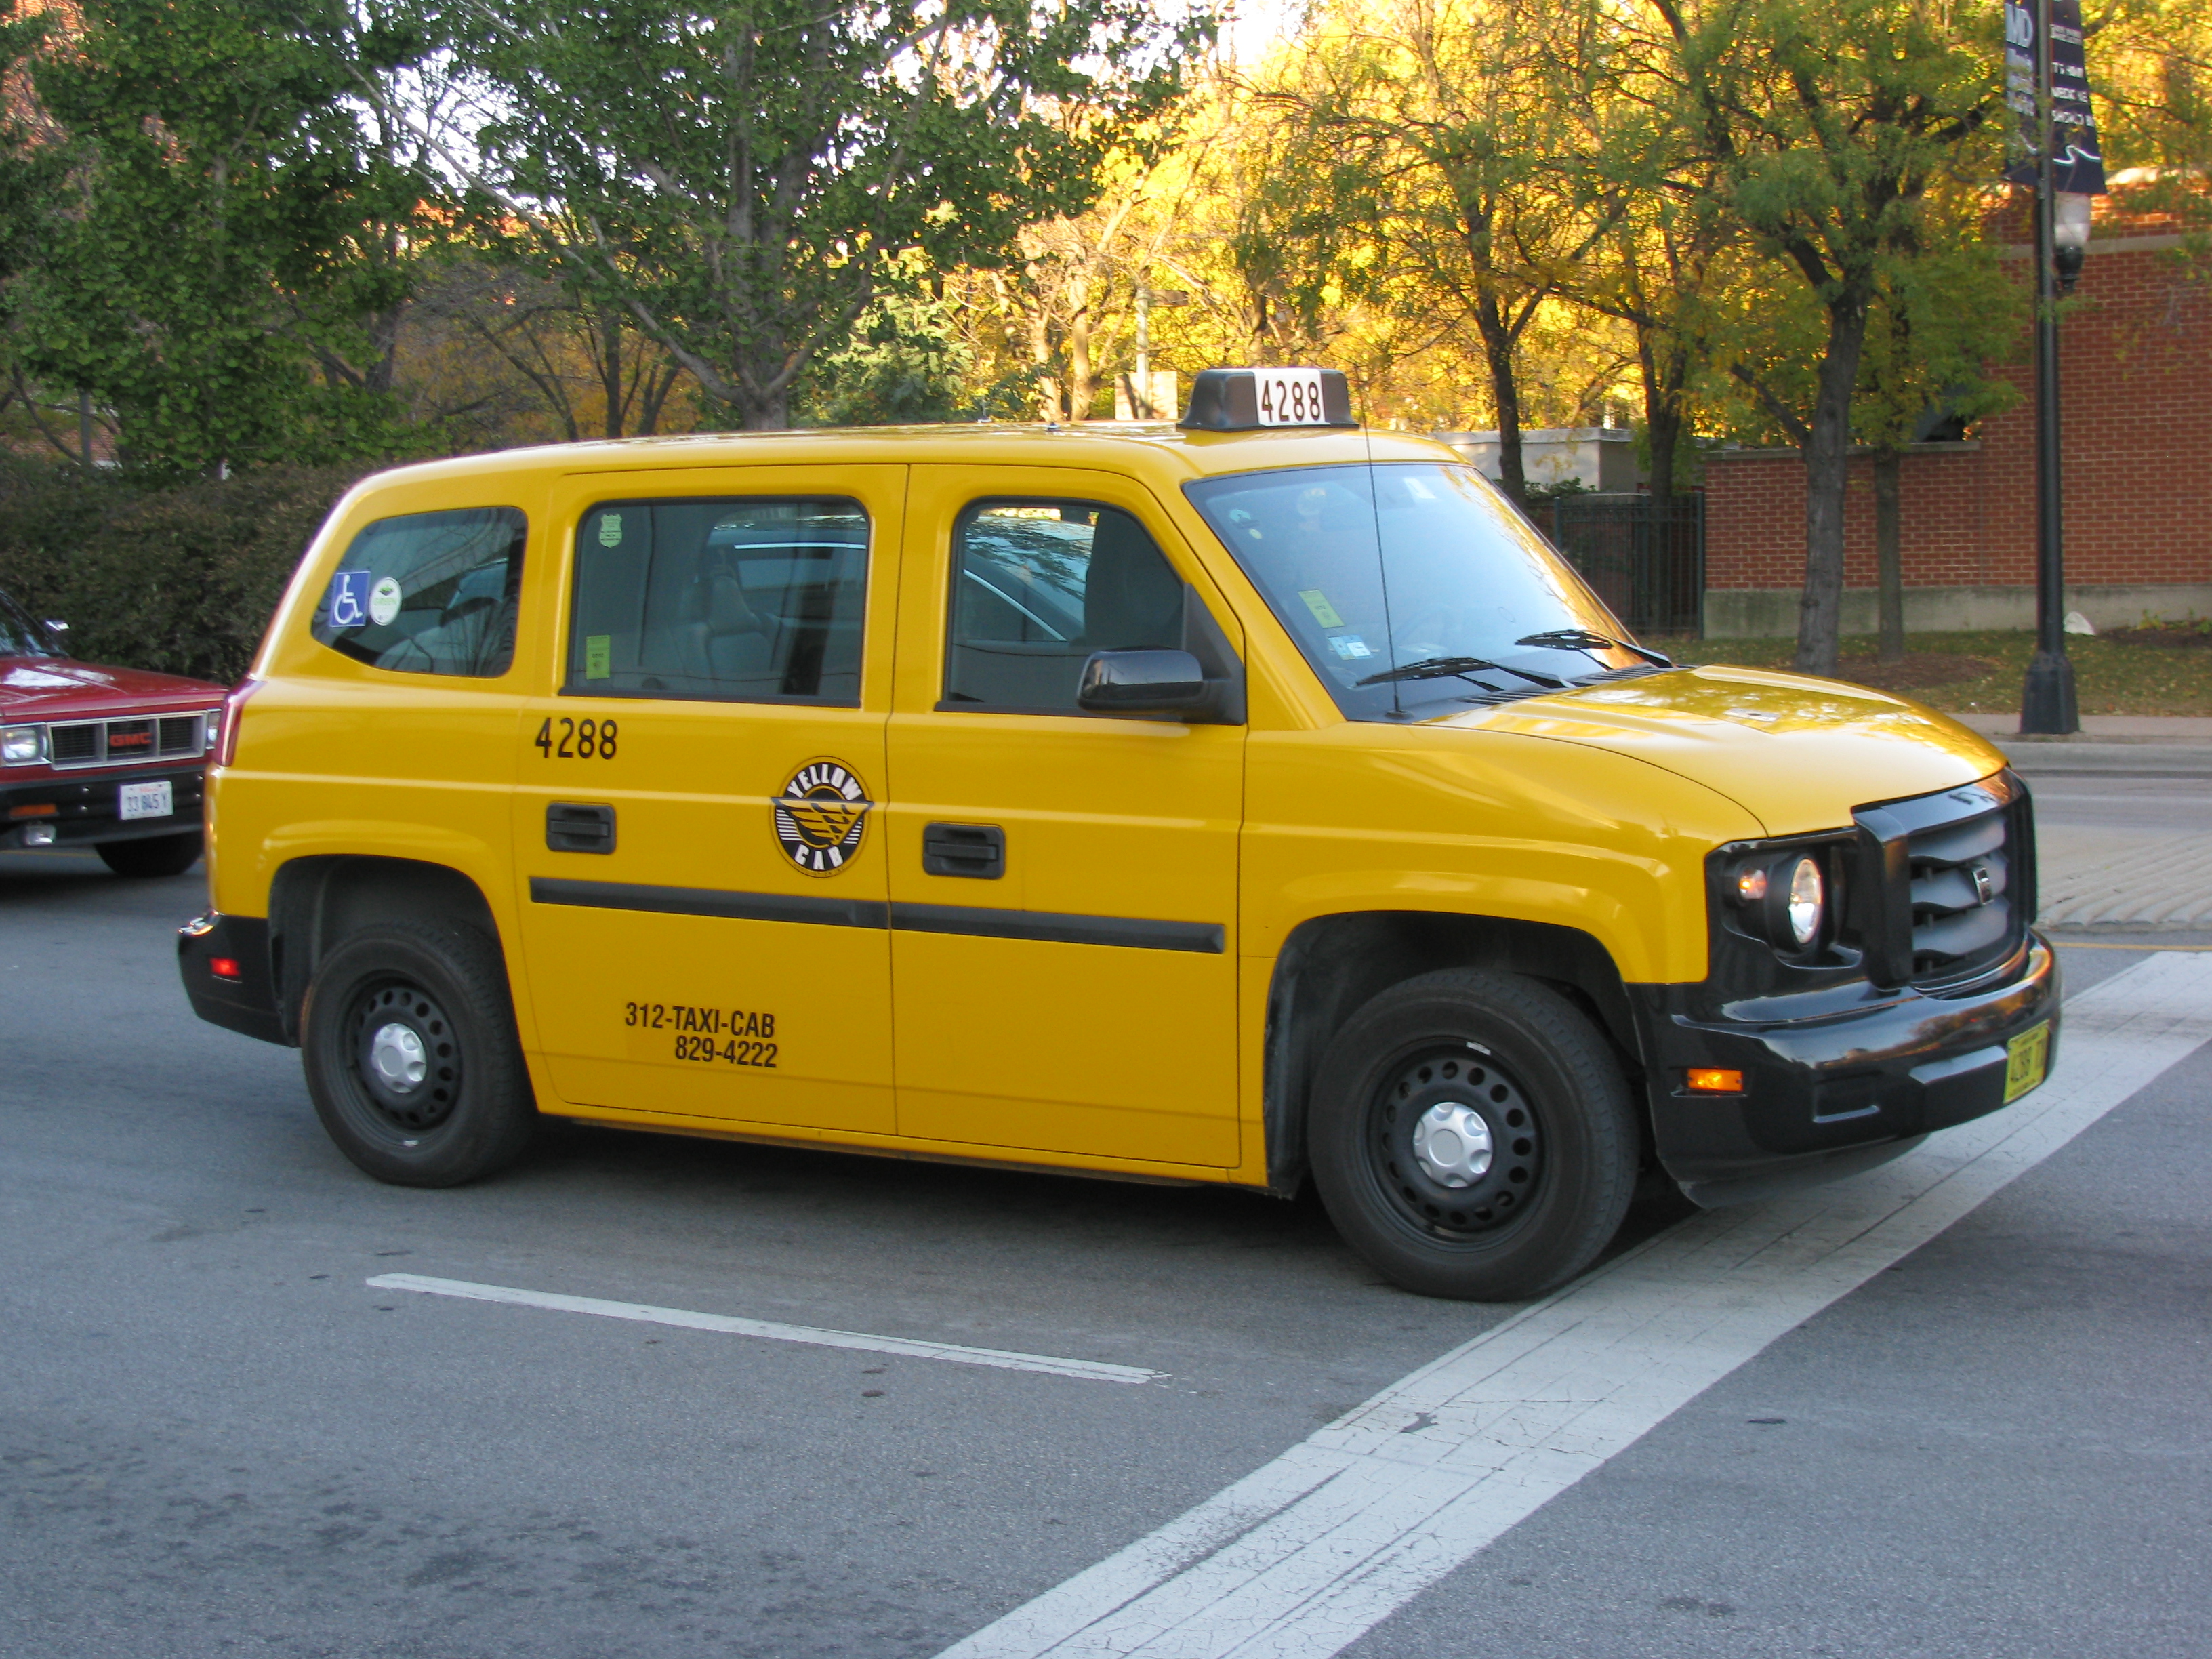 Taxameter - Taxi - Chicago - Illinois - USA